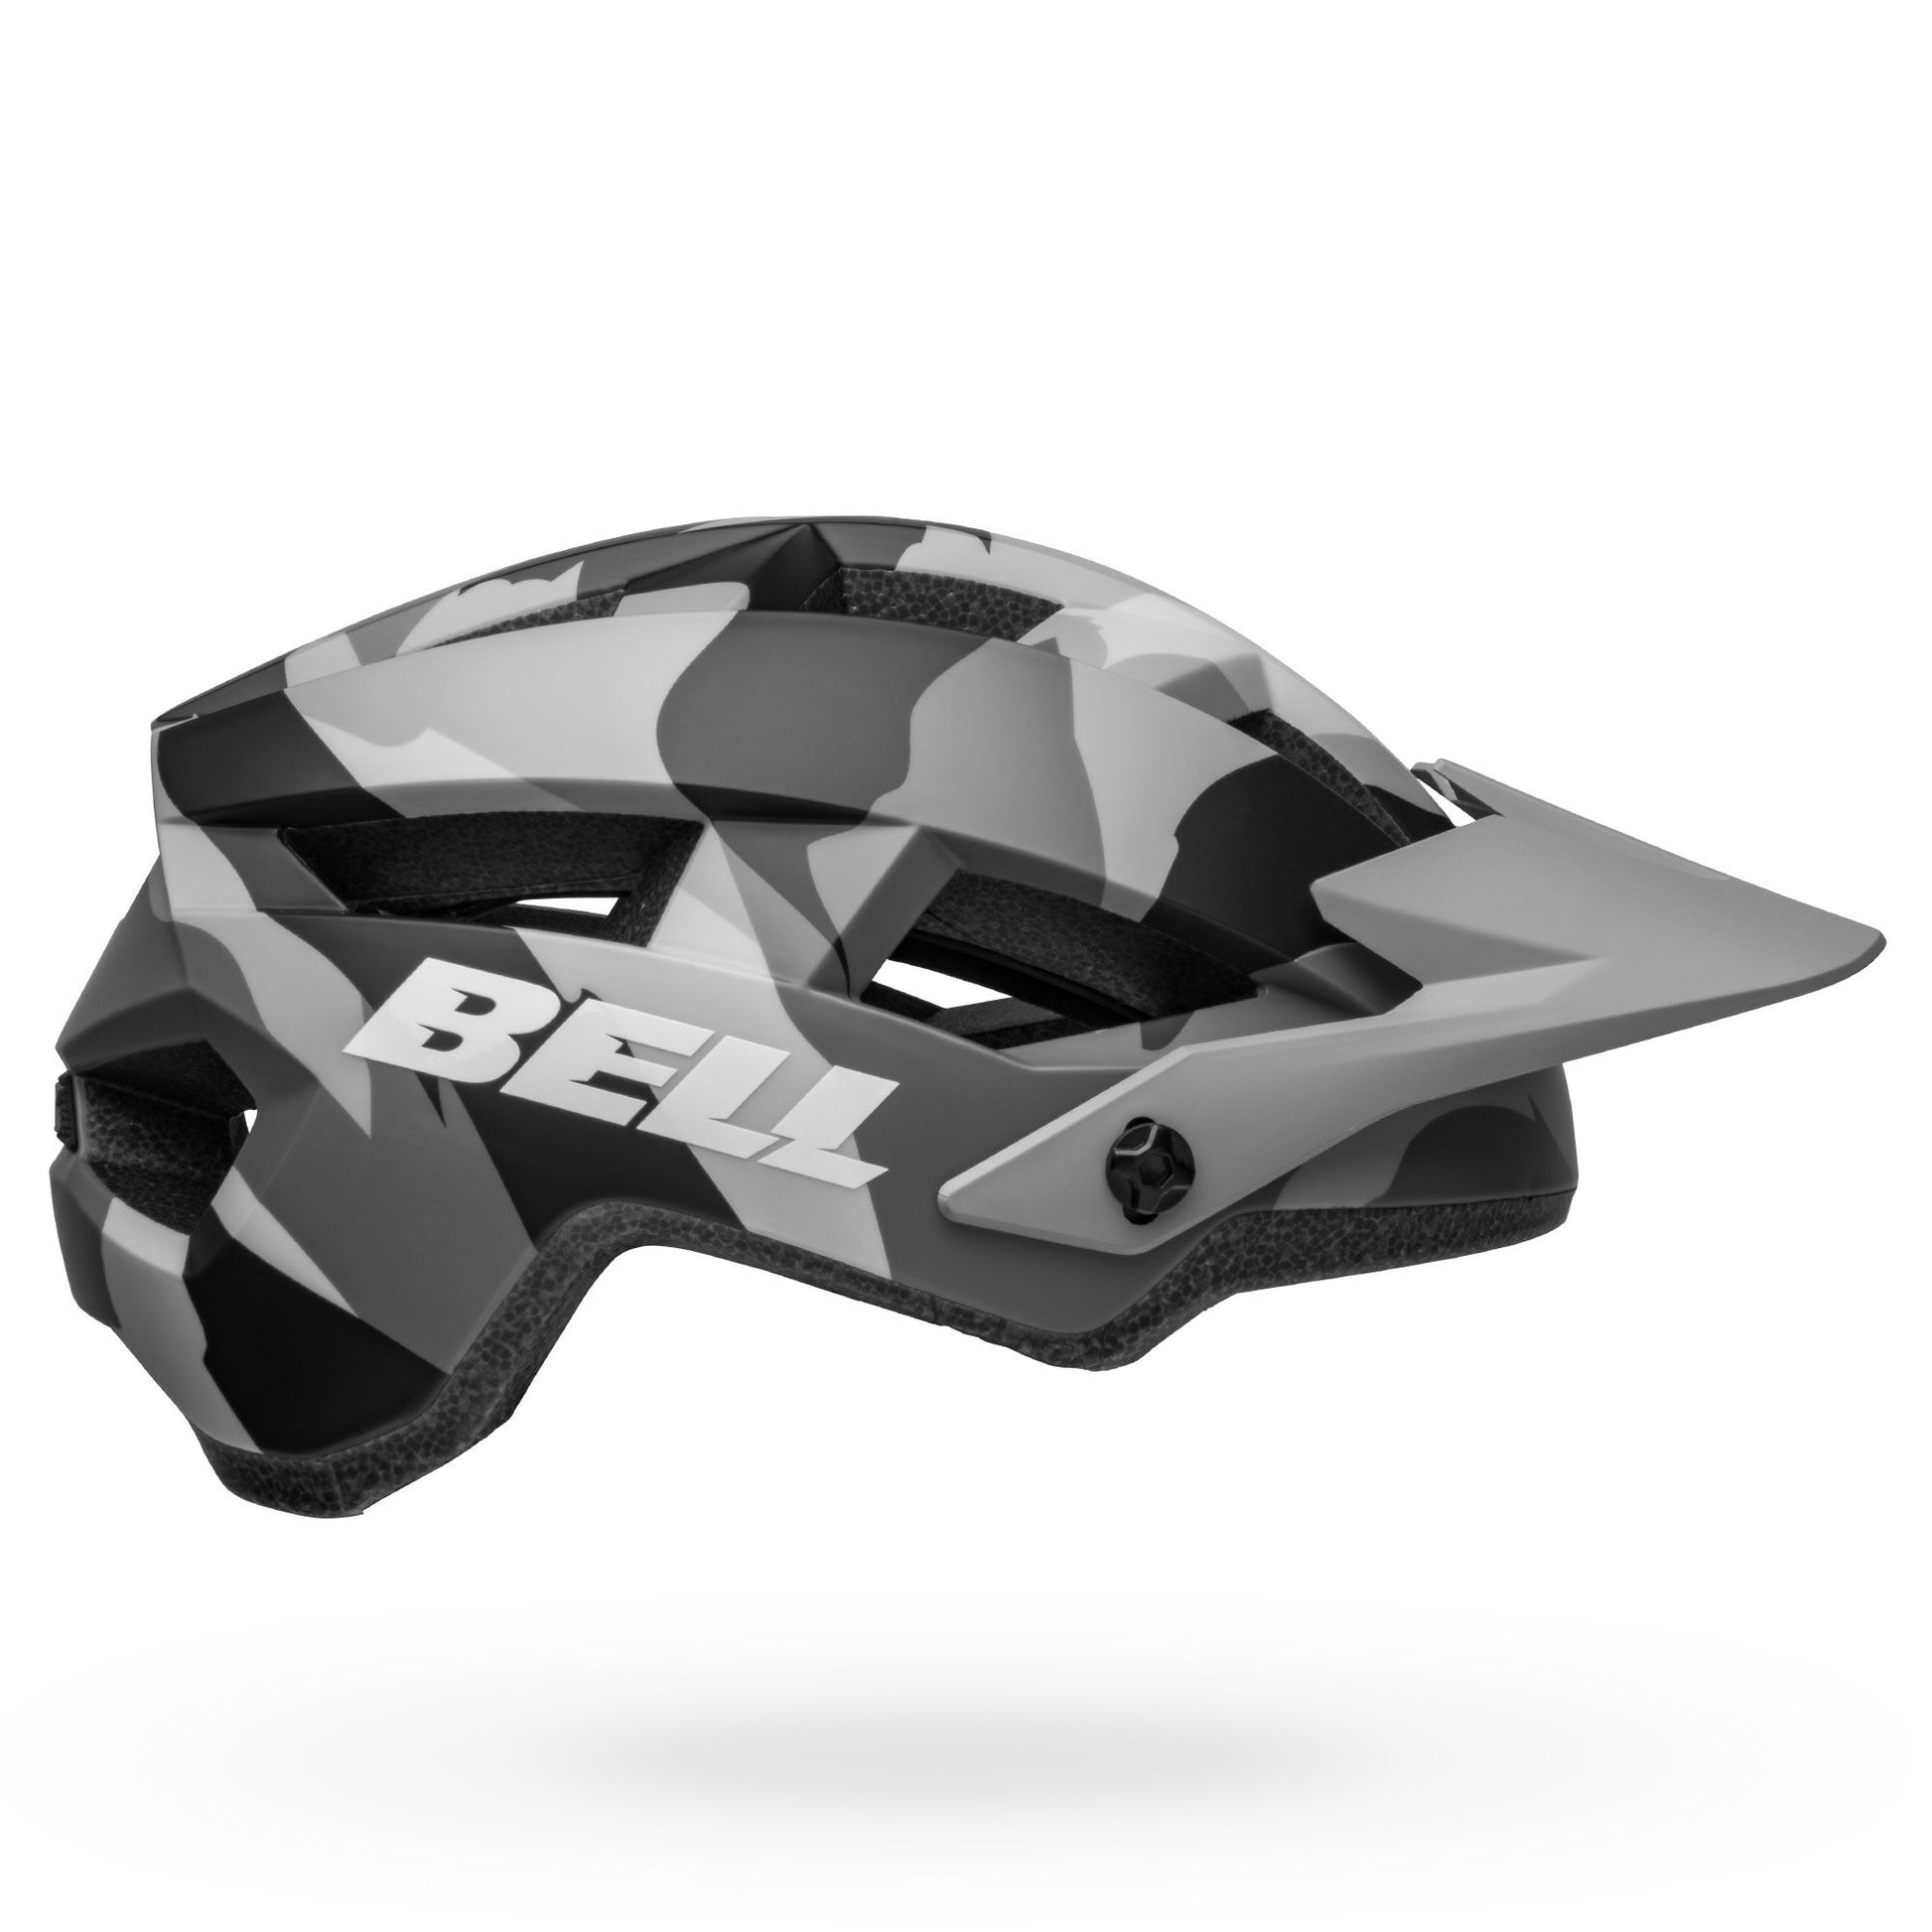 Bell Spark 2 MIPS Helmet Matte Grey Camo - Bell Bike Helmets